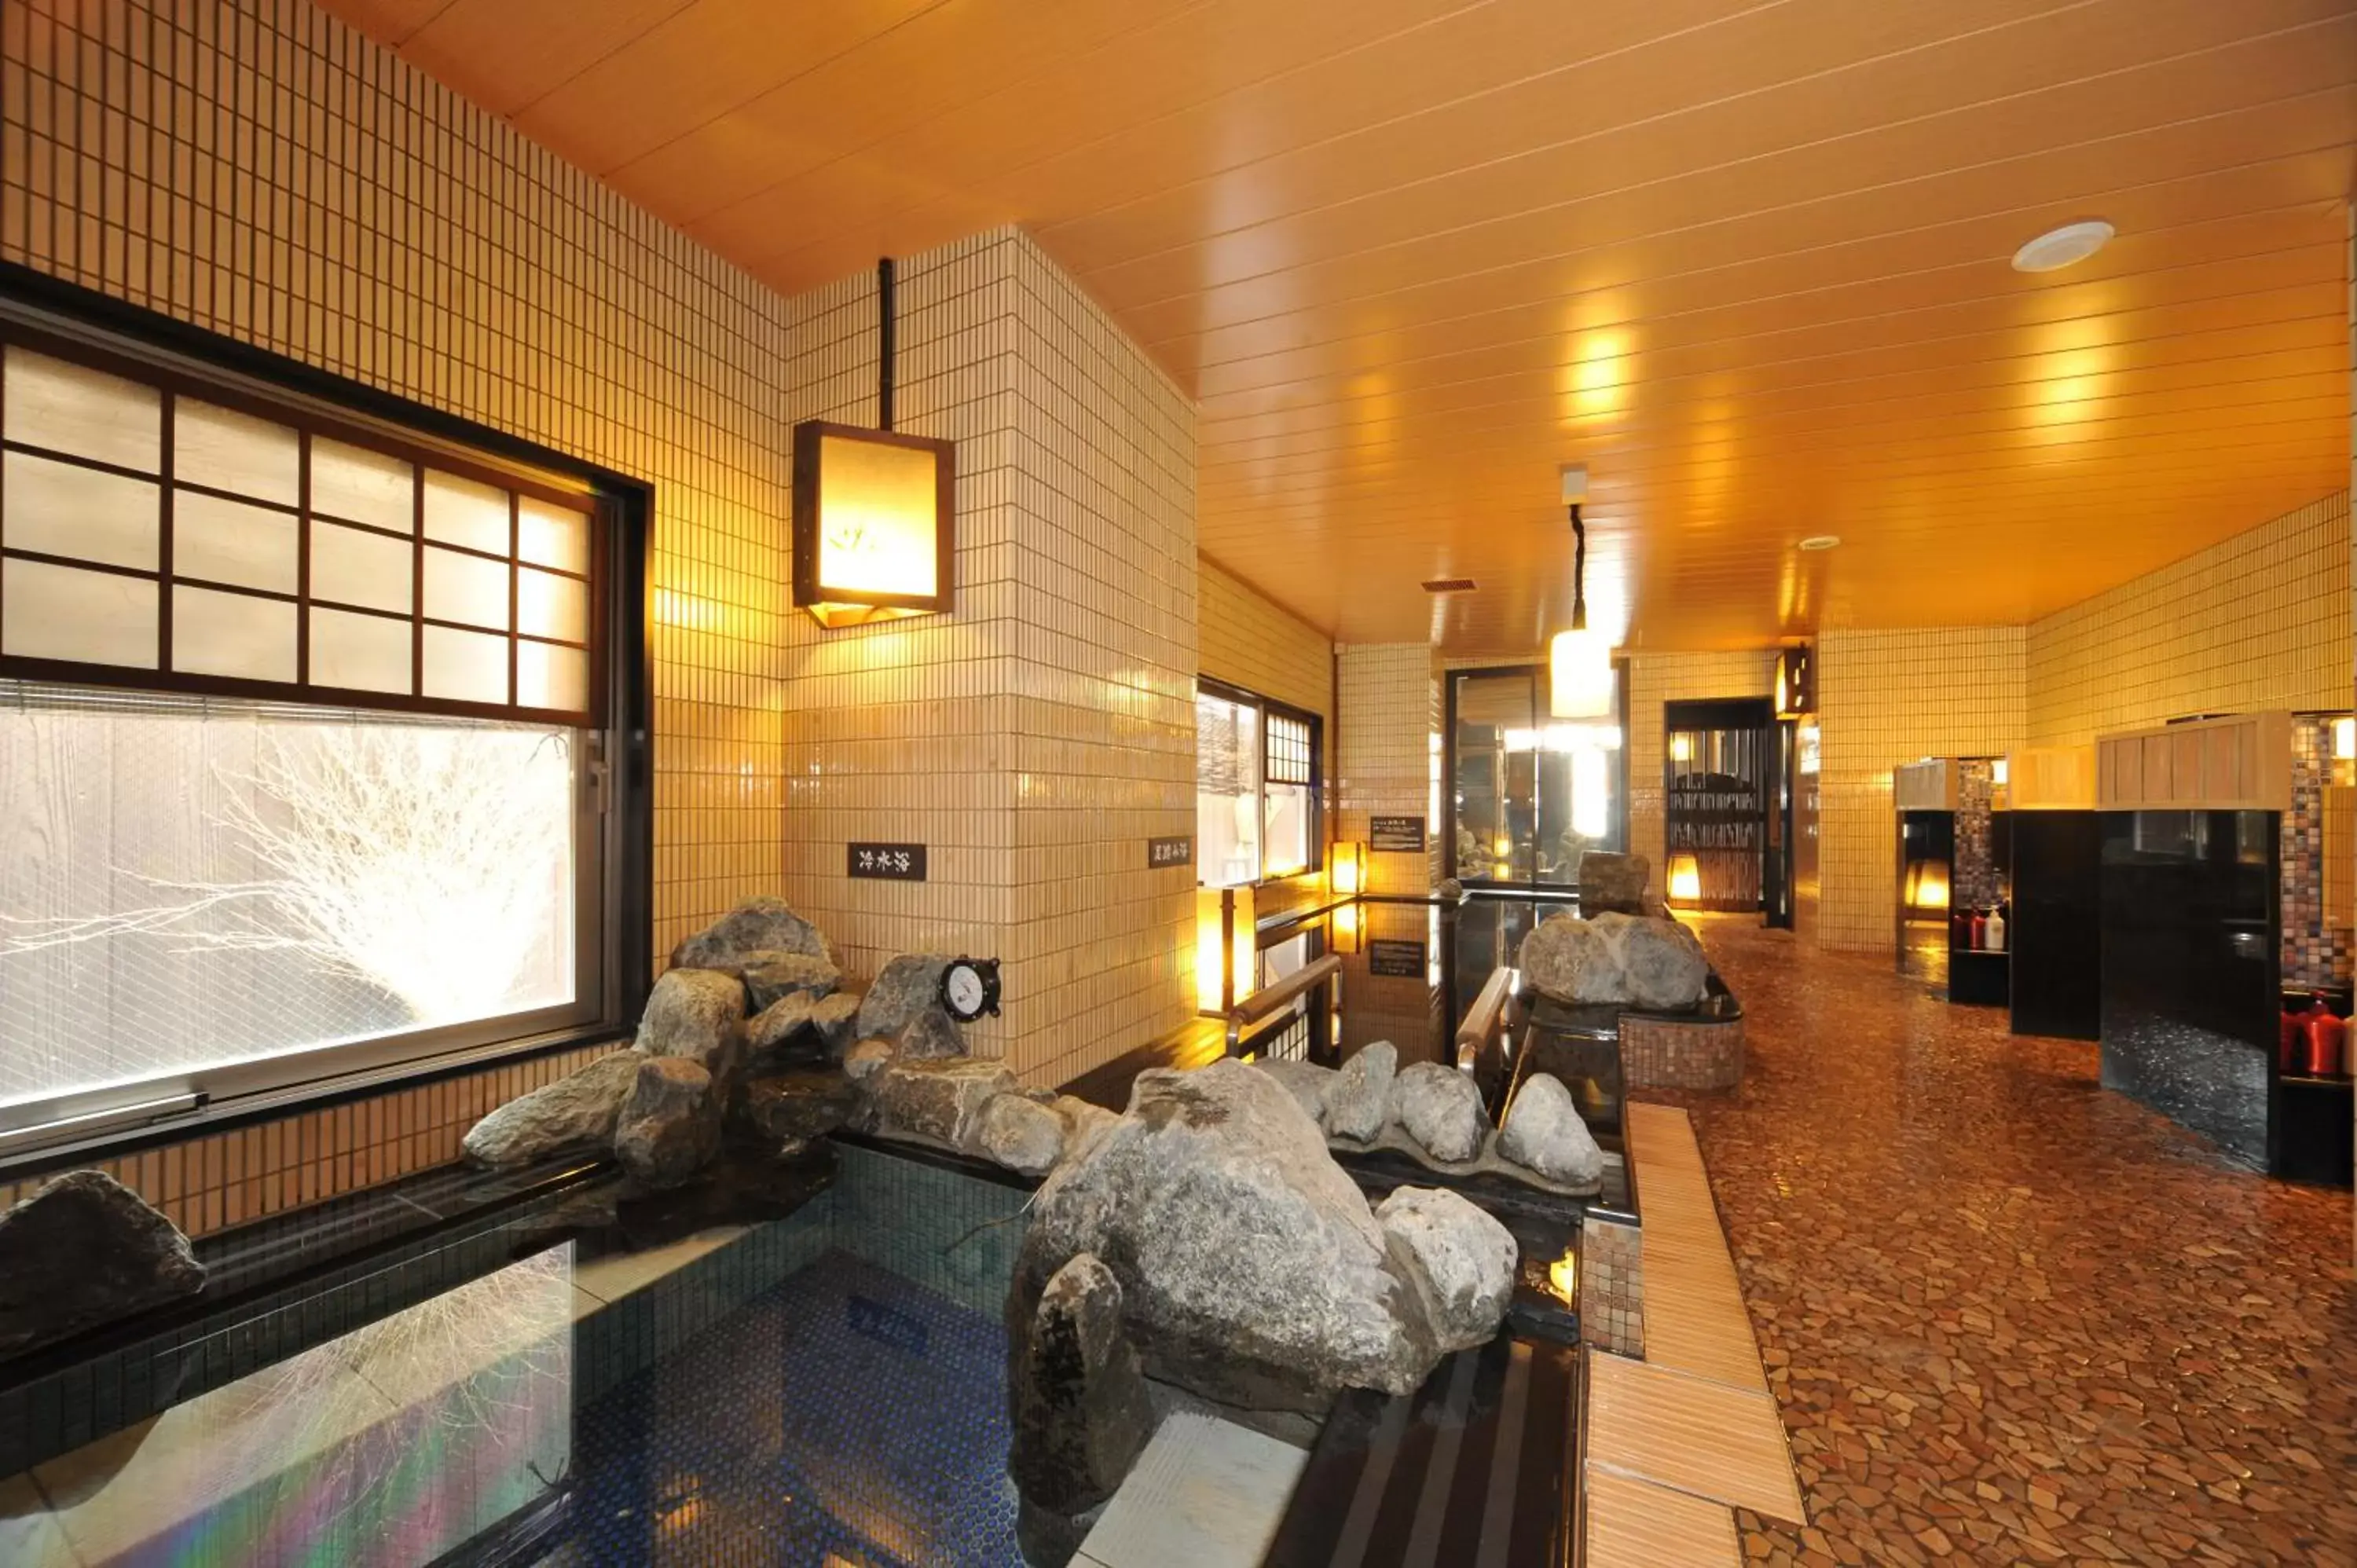 Hot Spring Bath in Dormy Inn Obihiro